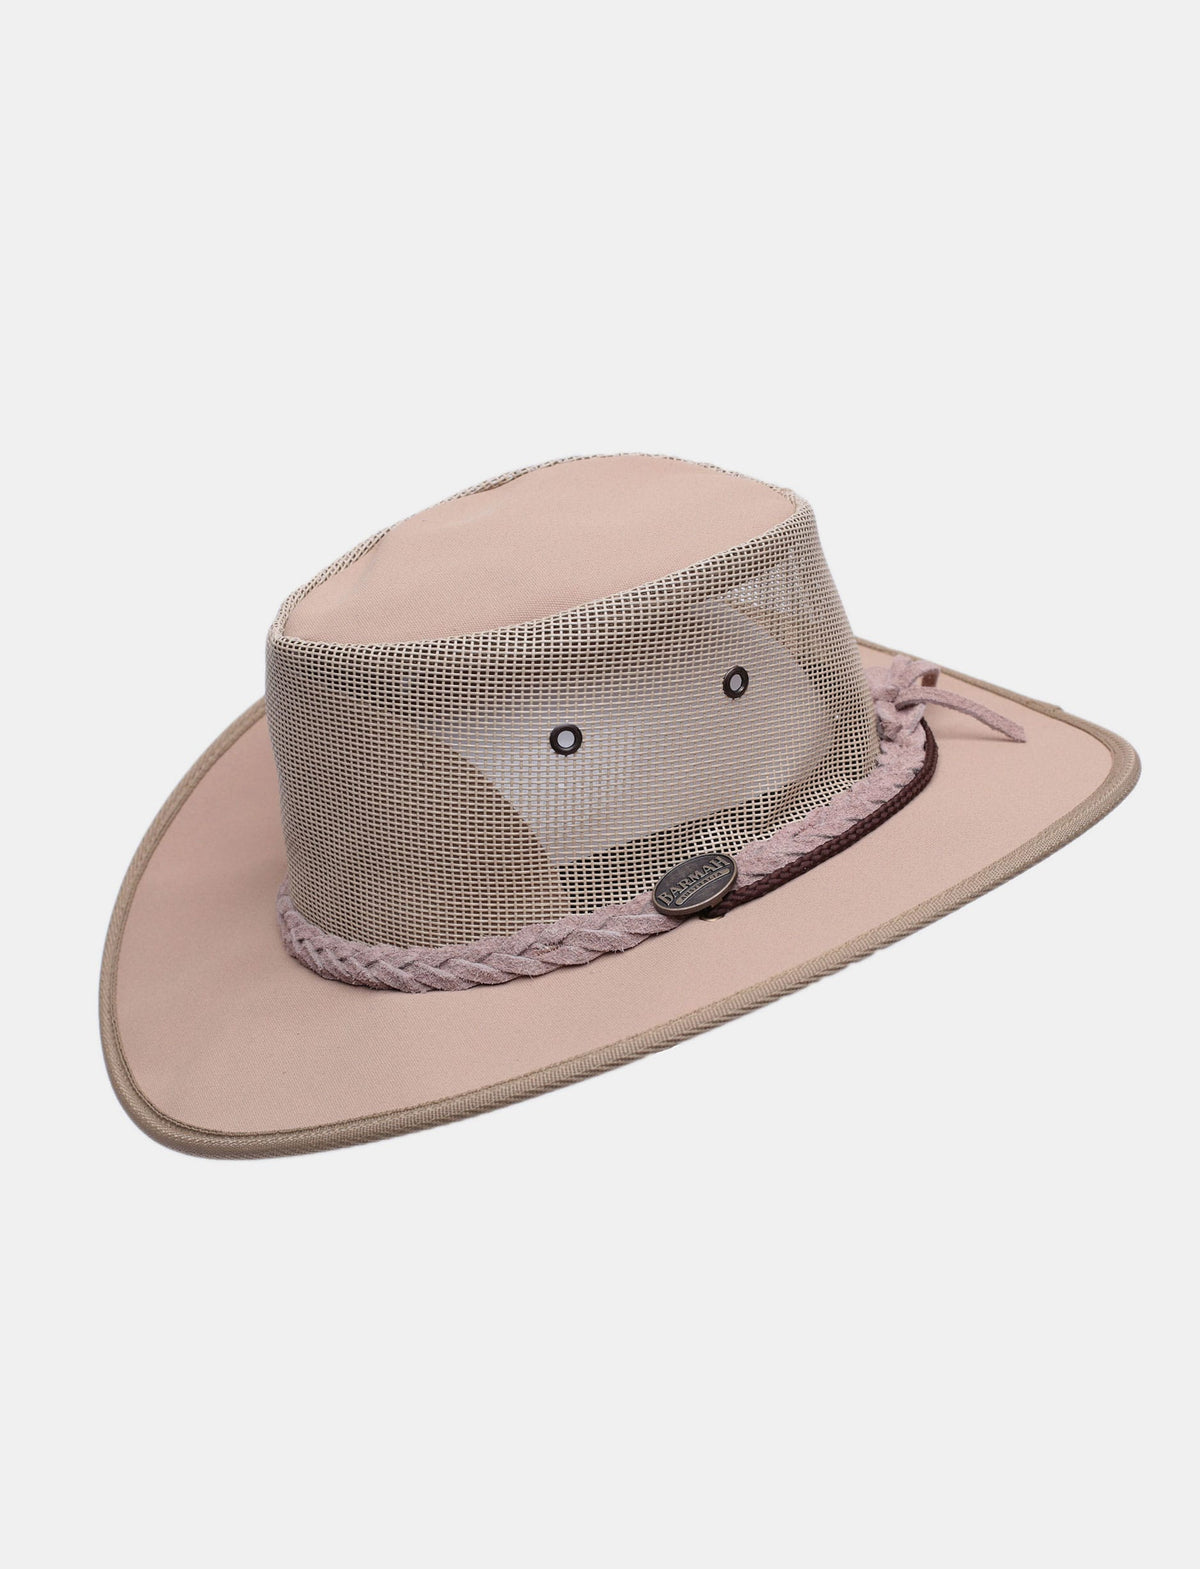 Barmah 1057 be - כובע בוקרים רחב שוליים ברמה מקנבס רשת-Barmah-S-נאקו